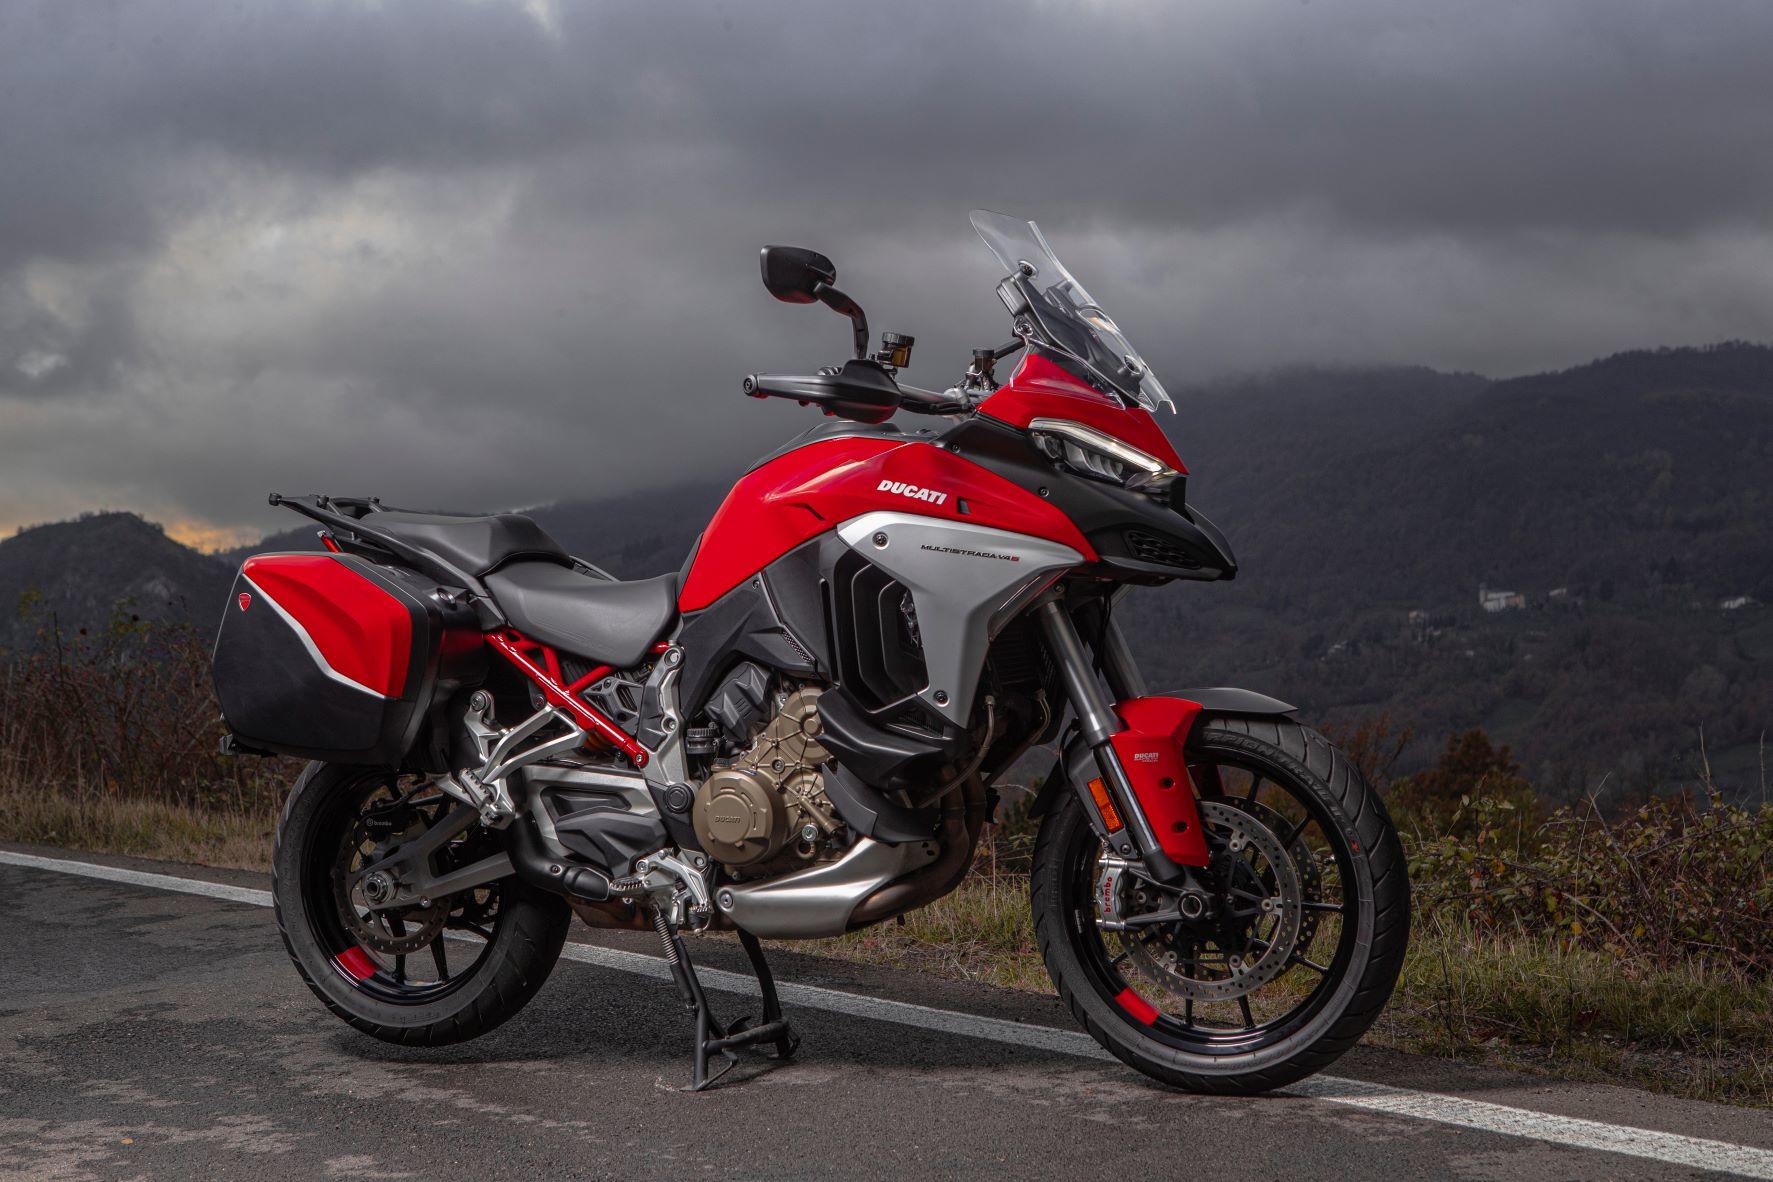 Ducati launches adventure tourer bikes V4, V4 S in India, price starts